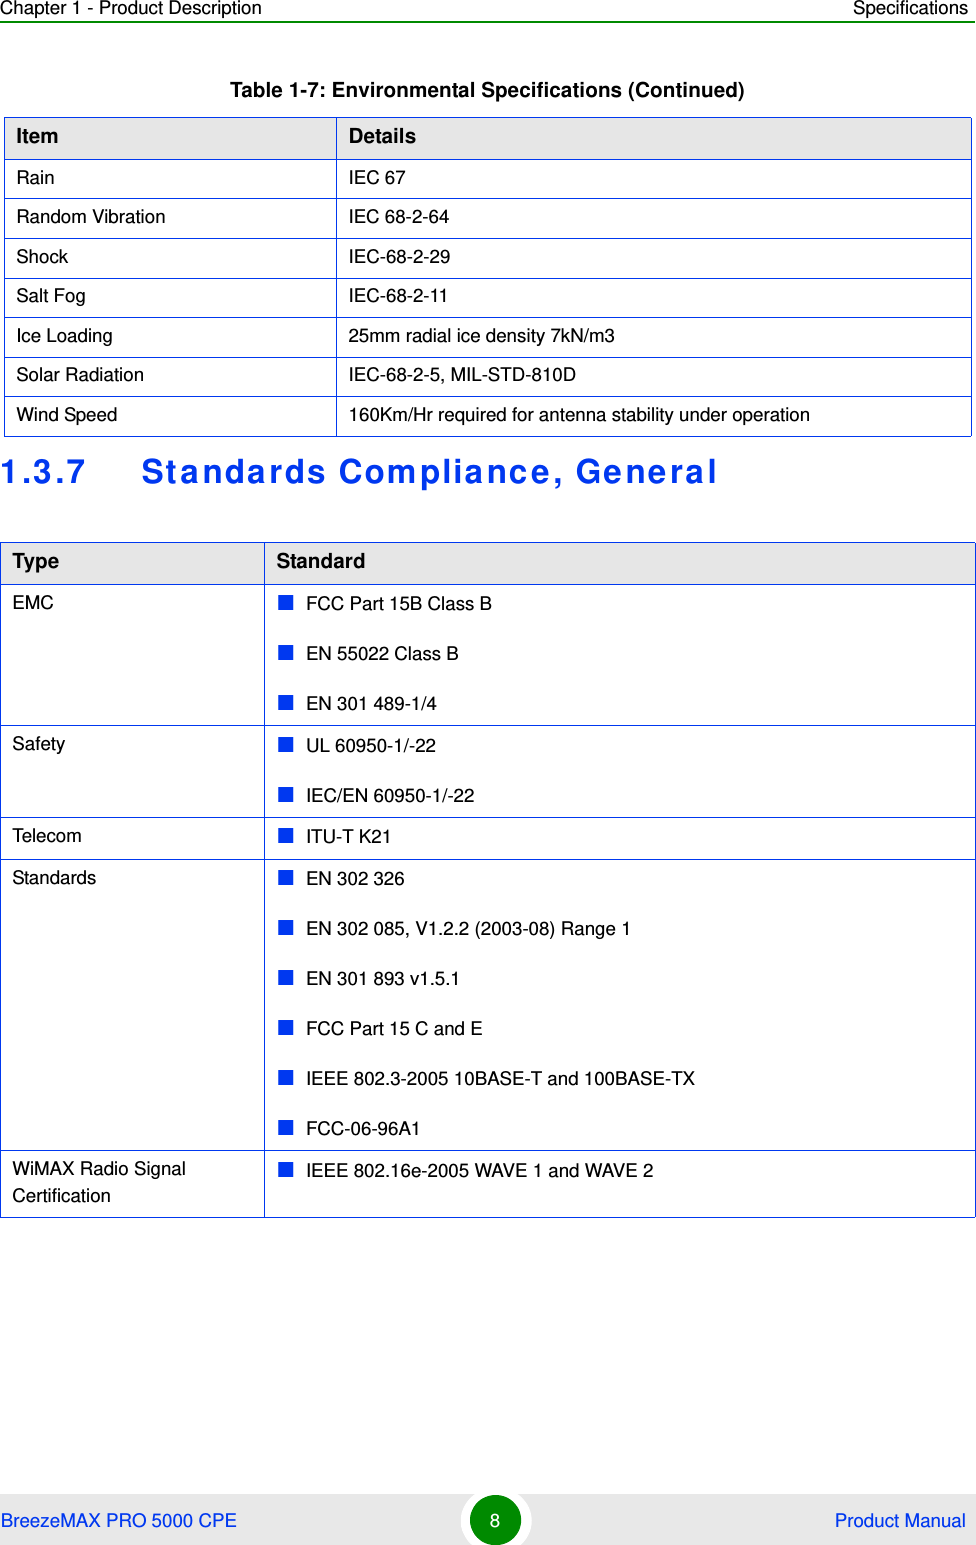 Chapter 1 - Product Description SpecificationsBreezeMAX PRO 5000 CPE 8 Product Manual1.3.7 Standards Compliance, GeneralRain IEC 67Random Vibration IEC 68-2-64Shock IEC-68-2-29Salt Fog IEC-68-2-11Ice Loading 25mm radial ice density 7kN/m3Solar Radiation IEC-68-2-5, MIL-STD-810DWind Speed 160Km/Hr required for antenna stability under operationType StandardEMC FCC Part 15B Class BEN 55022 Class BEN 301 489-1/4Safety UL 60950-1/-22IEC/EN 60950-1/-22Telecom ITU-T K21Standards EN 302 326 EN 302 085, V1.2.2 (2003-08) Range 1EN 301 893 v1.5.1 FCC Part 15 C and EIEEE 802.3-2005 10BASE-T and 100BASE-TX FCC-06-96A1WiMAX Radio Signal CertificationIEEE 802.16e-2005 WAVE 1 and WAVE 2Table 1-7: Environmental Specifications (Continued)Item Details